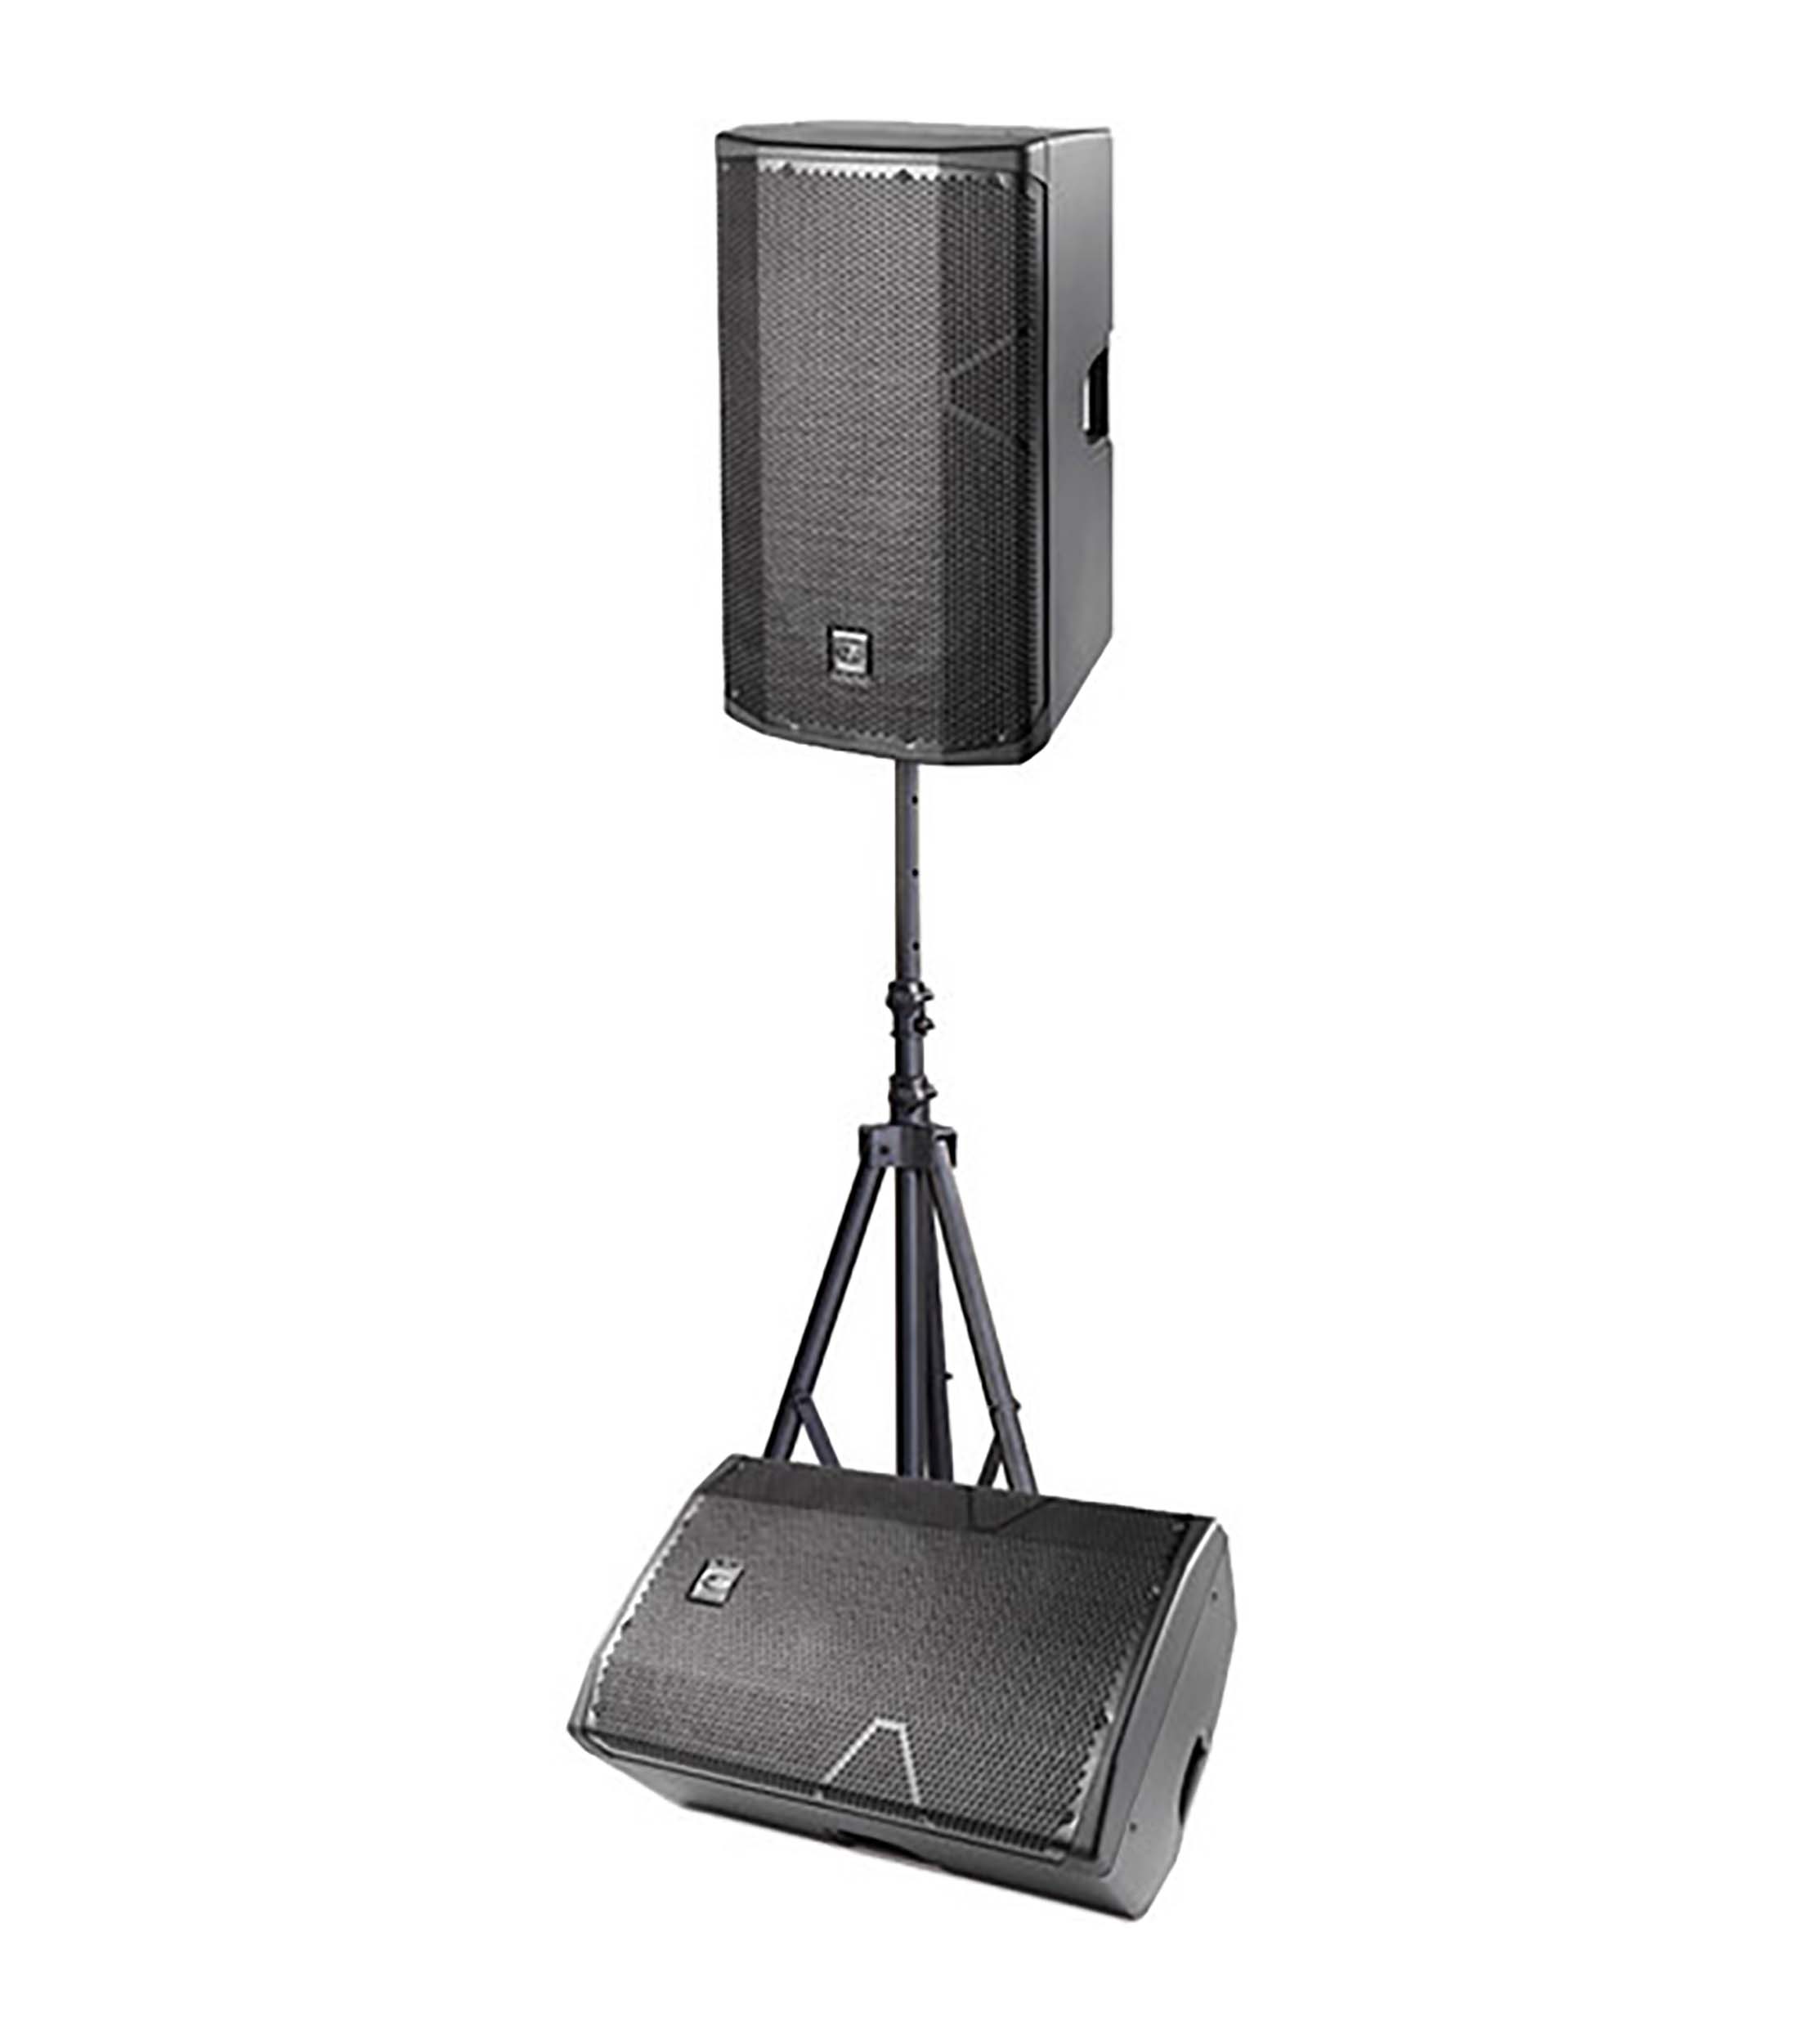 DAS Audio 715ACVRALTEA15718A, 15-Inch Powered Speaker DJ Package with Subwoofer by DAS Audio